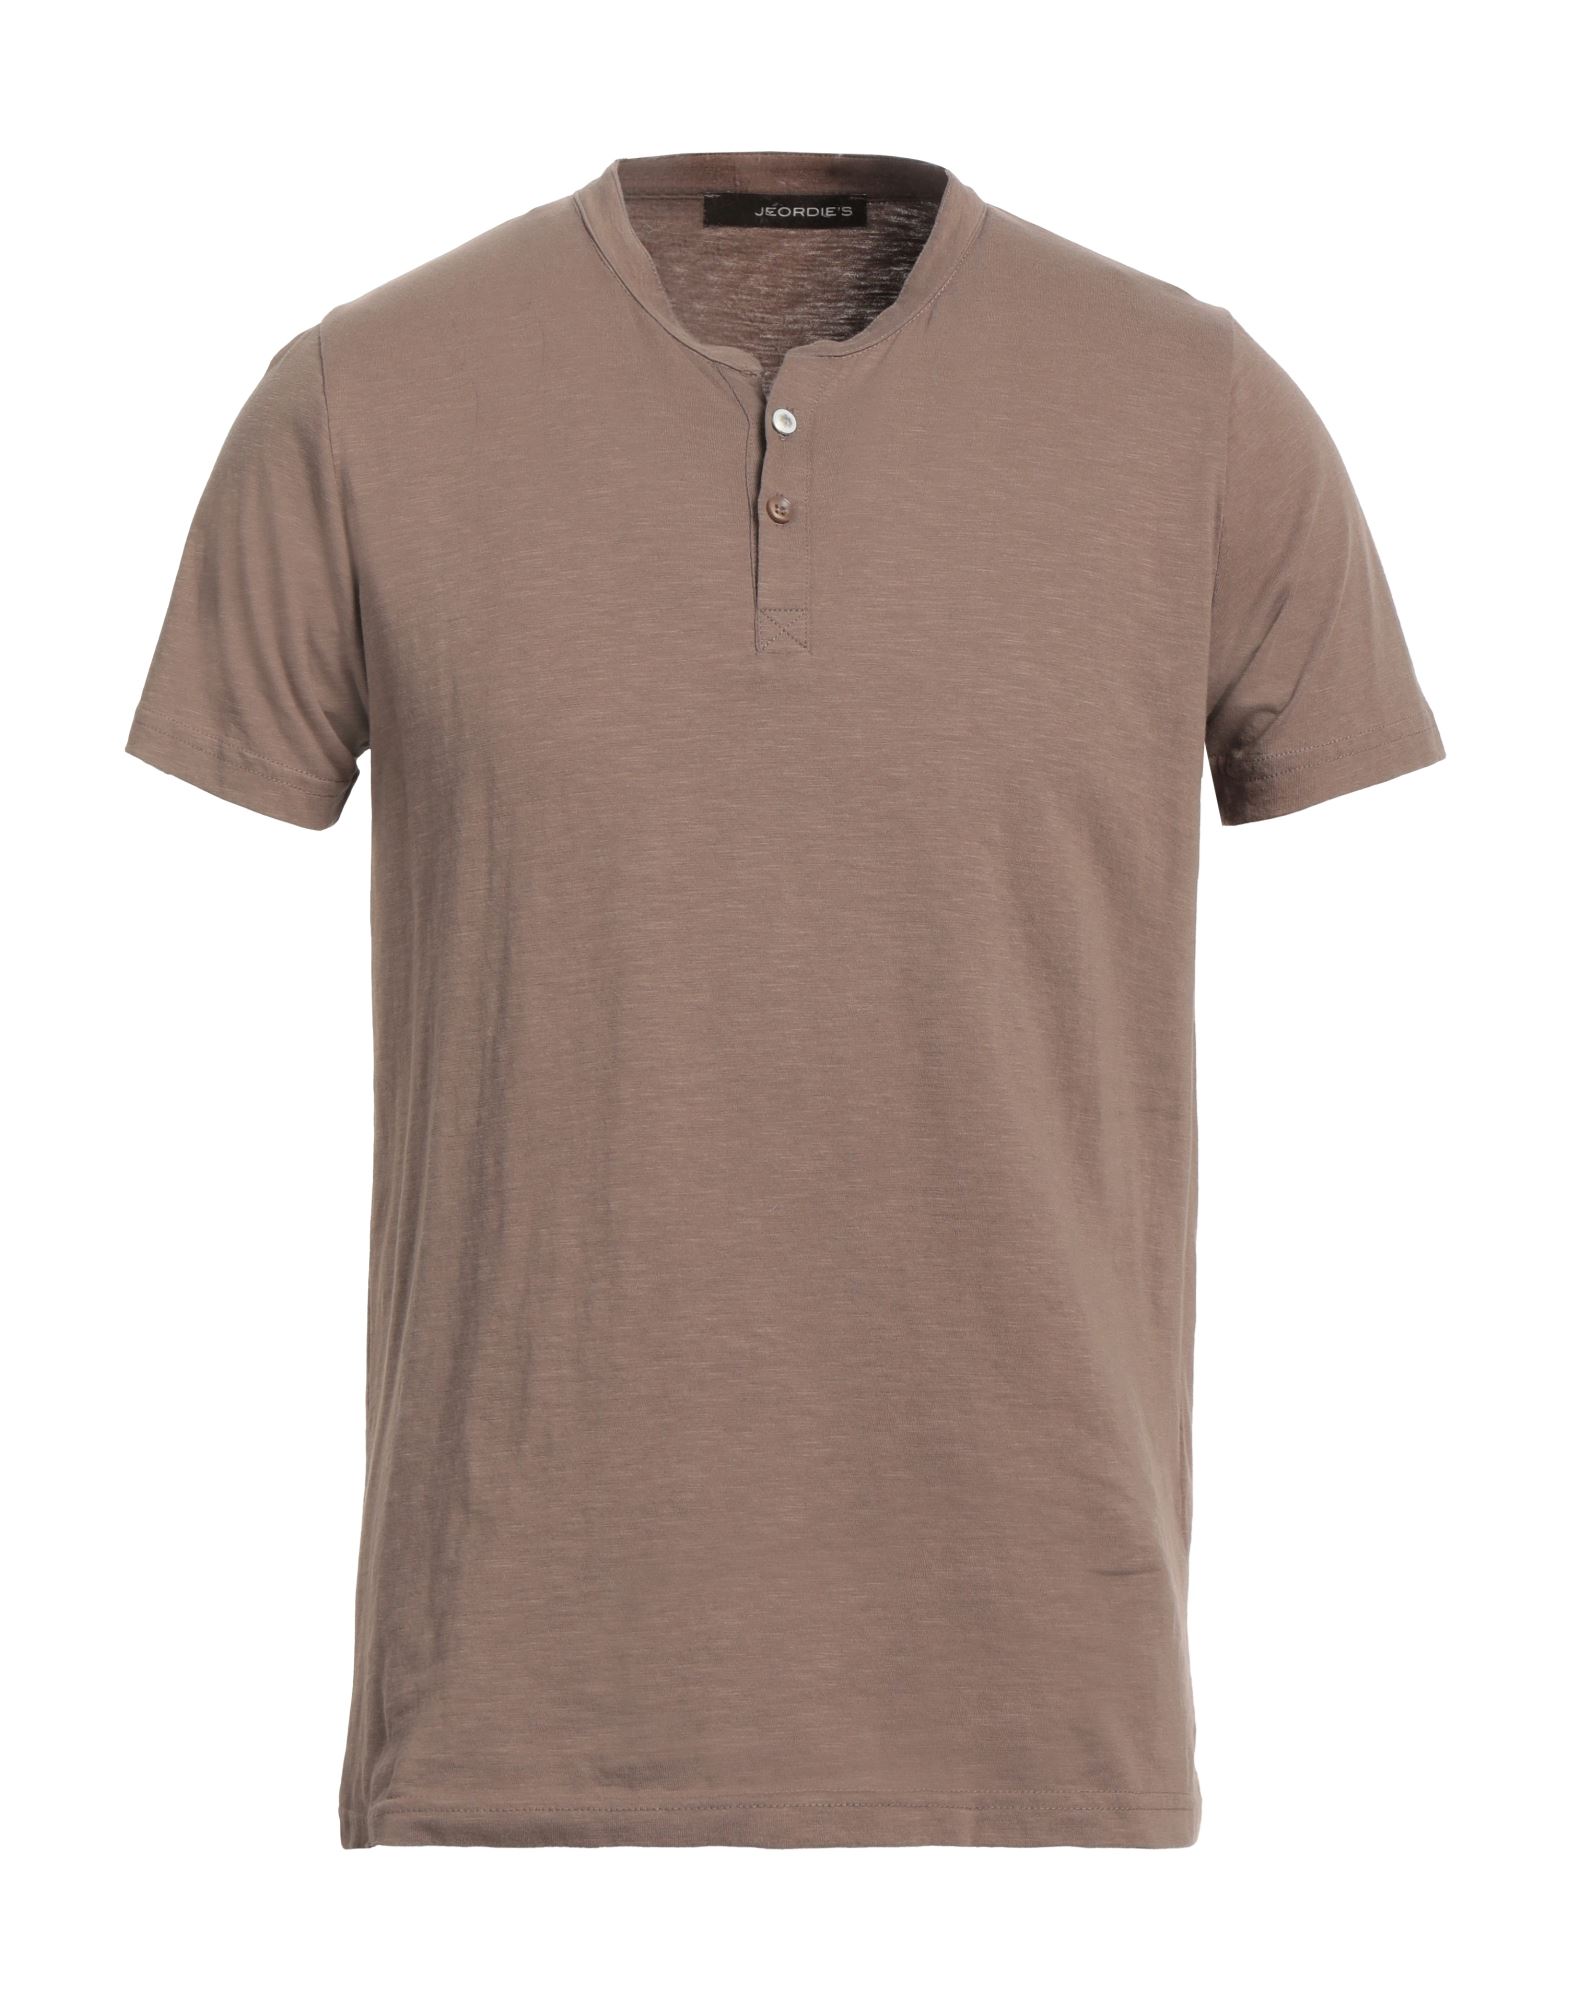 Jeordie's Man T-shirt Brown Size L Cotton